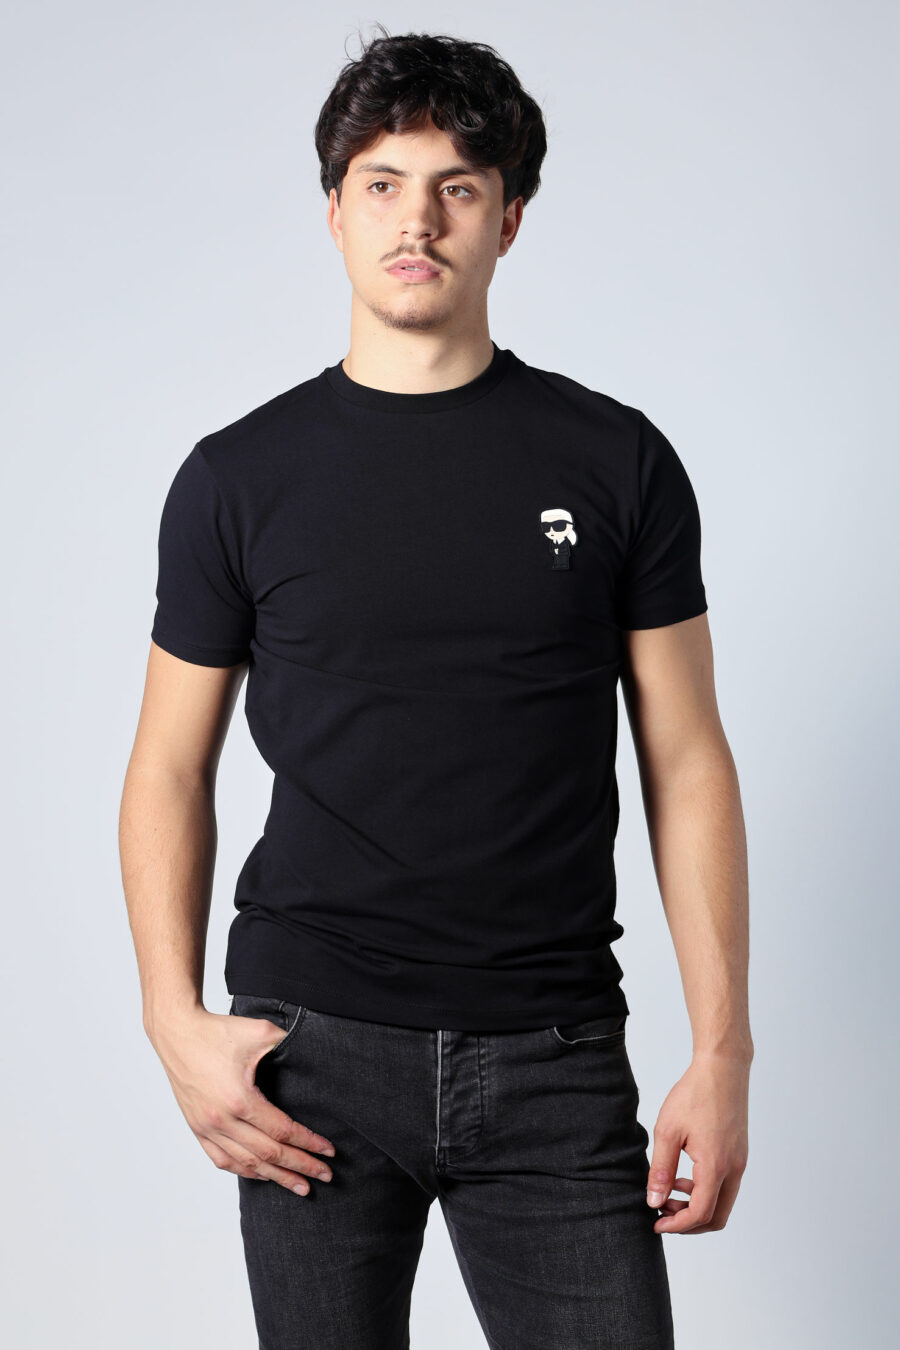 T-shirt preta com o logótipo "ikonik" - Catálogo sem título 05720